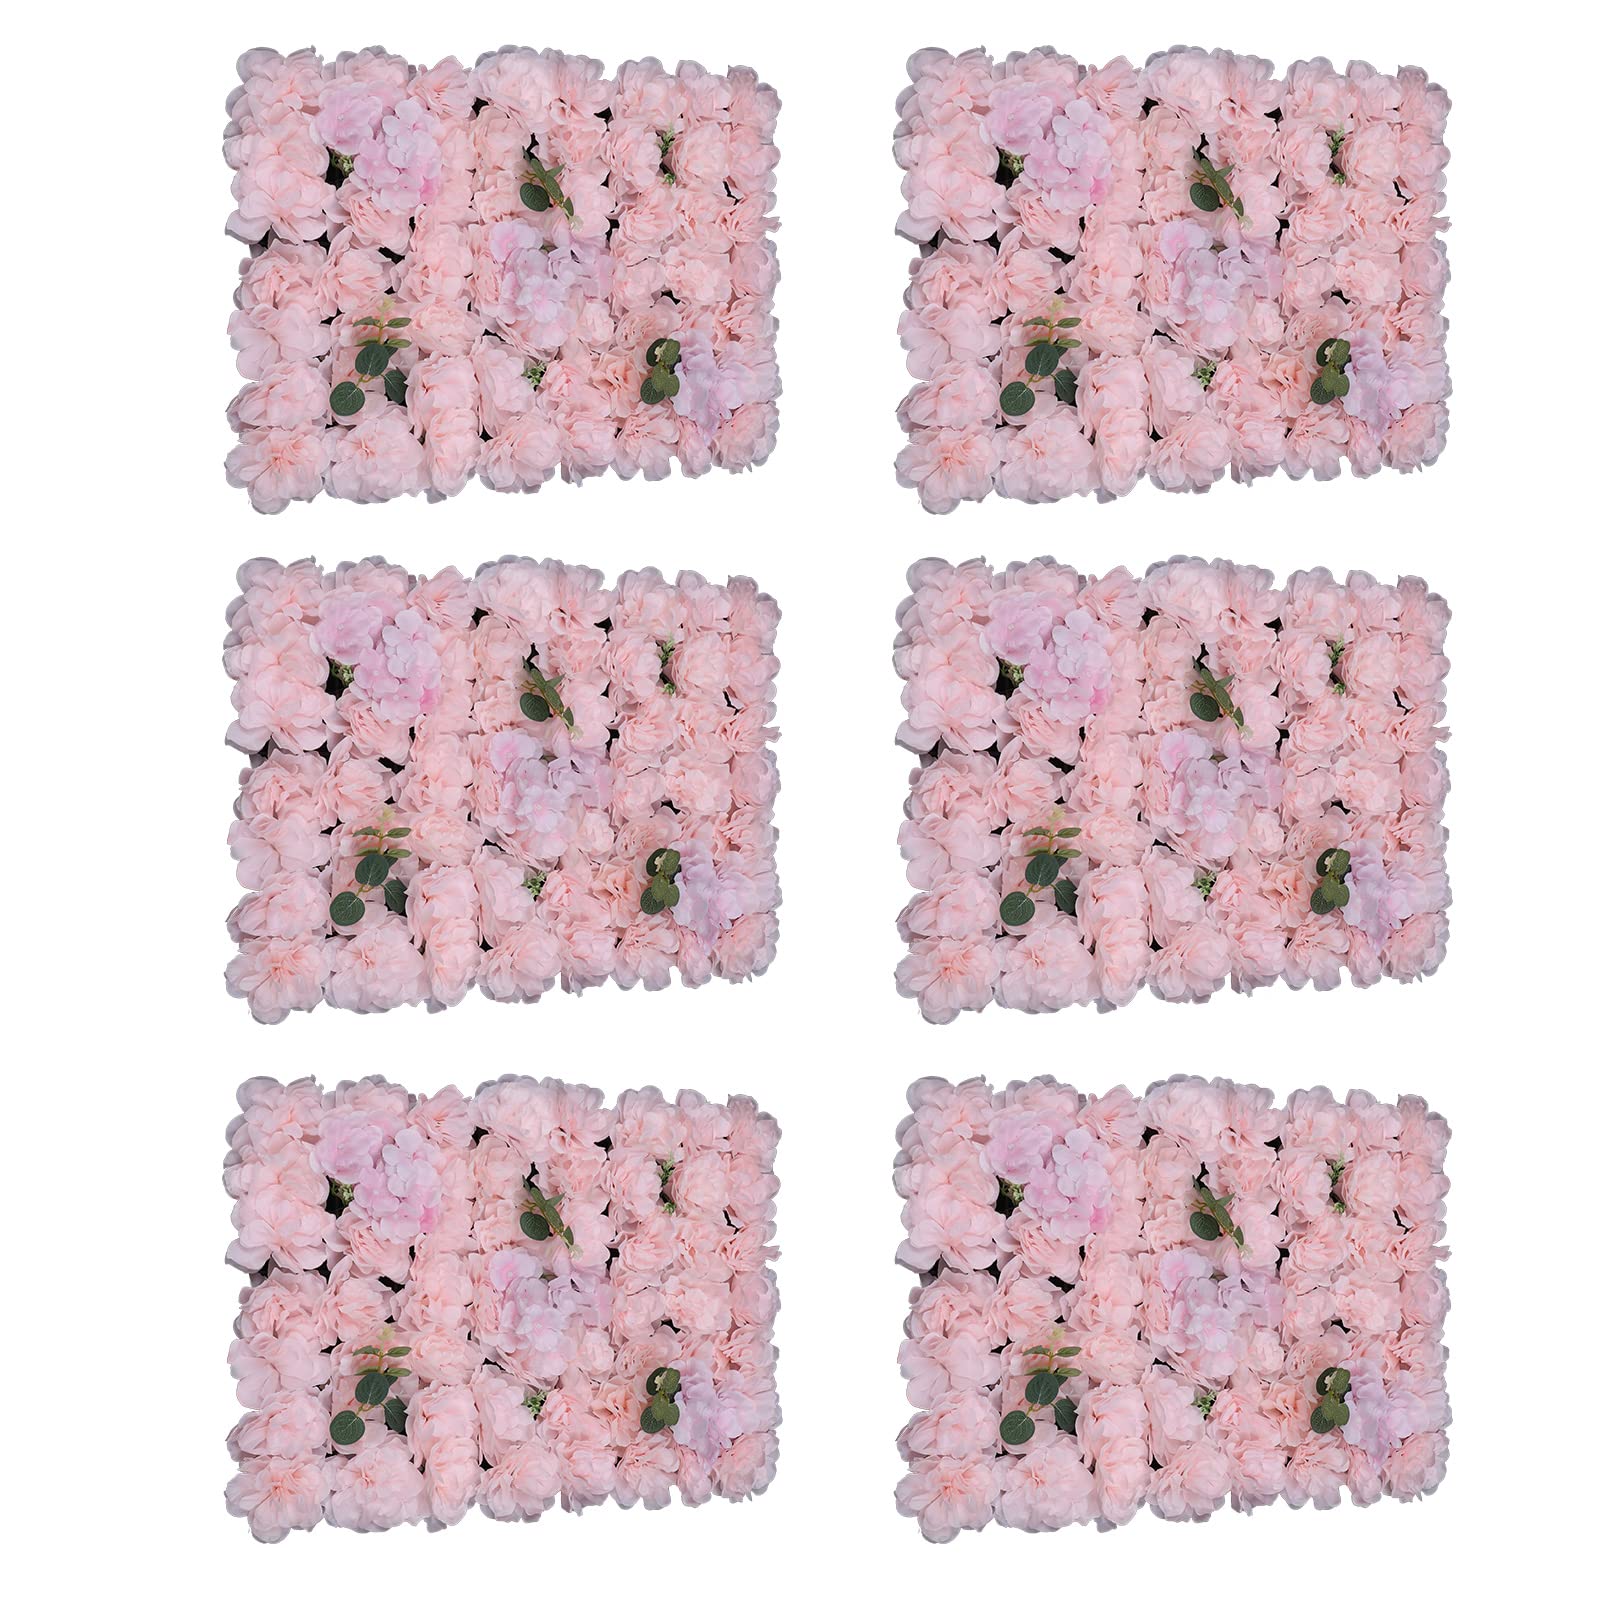 6 pezzi di fiori artificiali di seta da parete, pannelli da parete con rose di seta